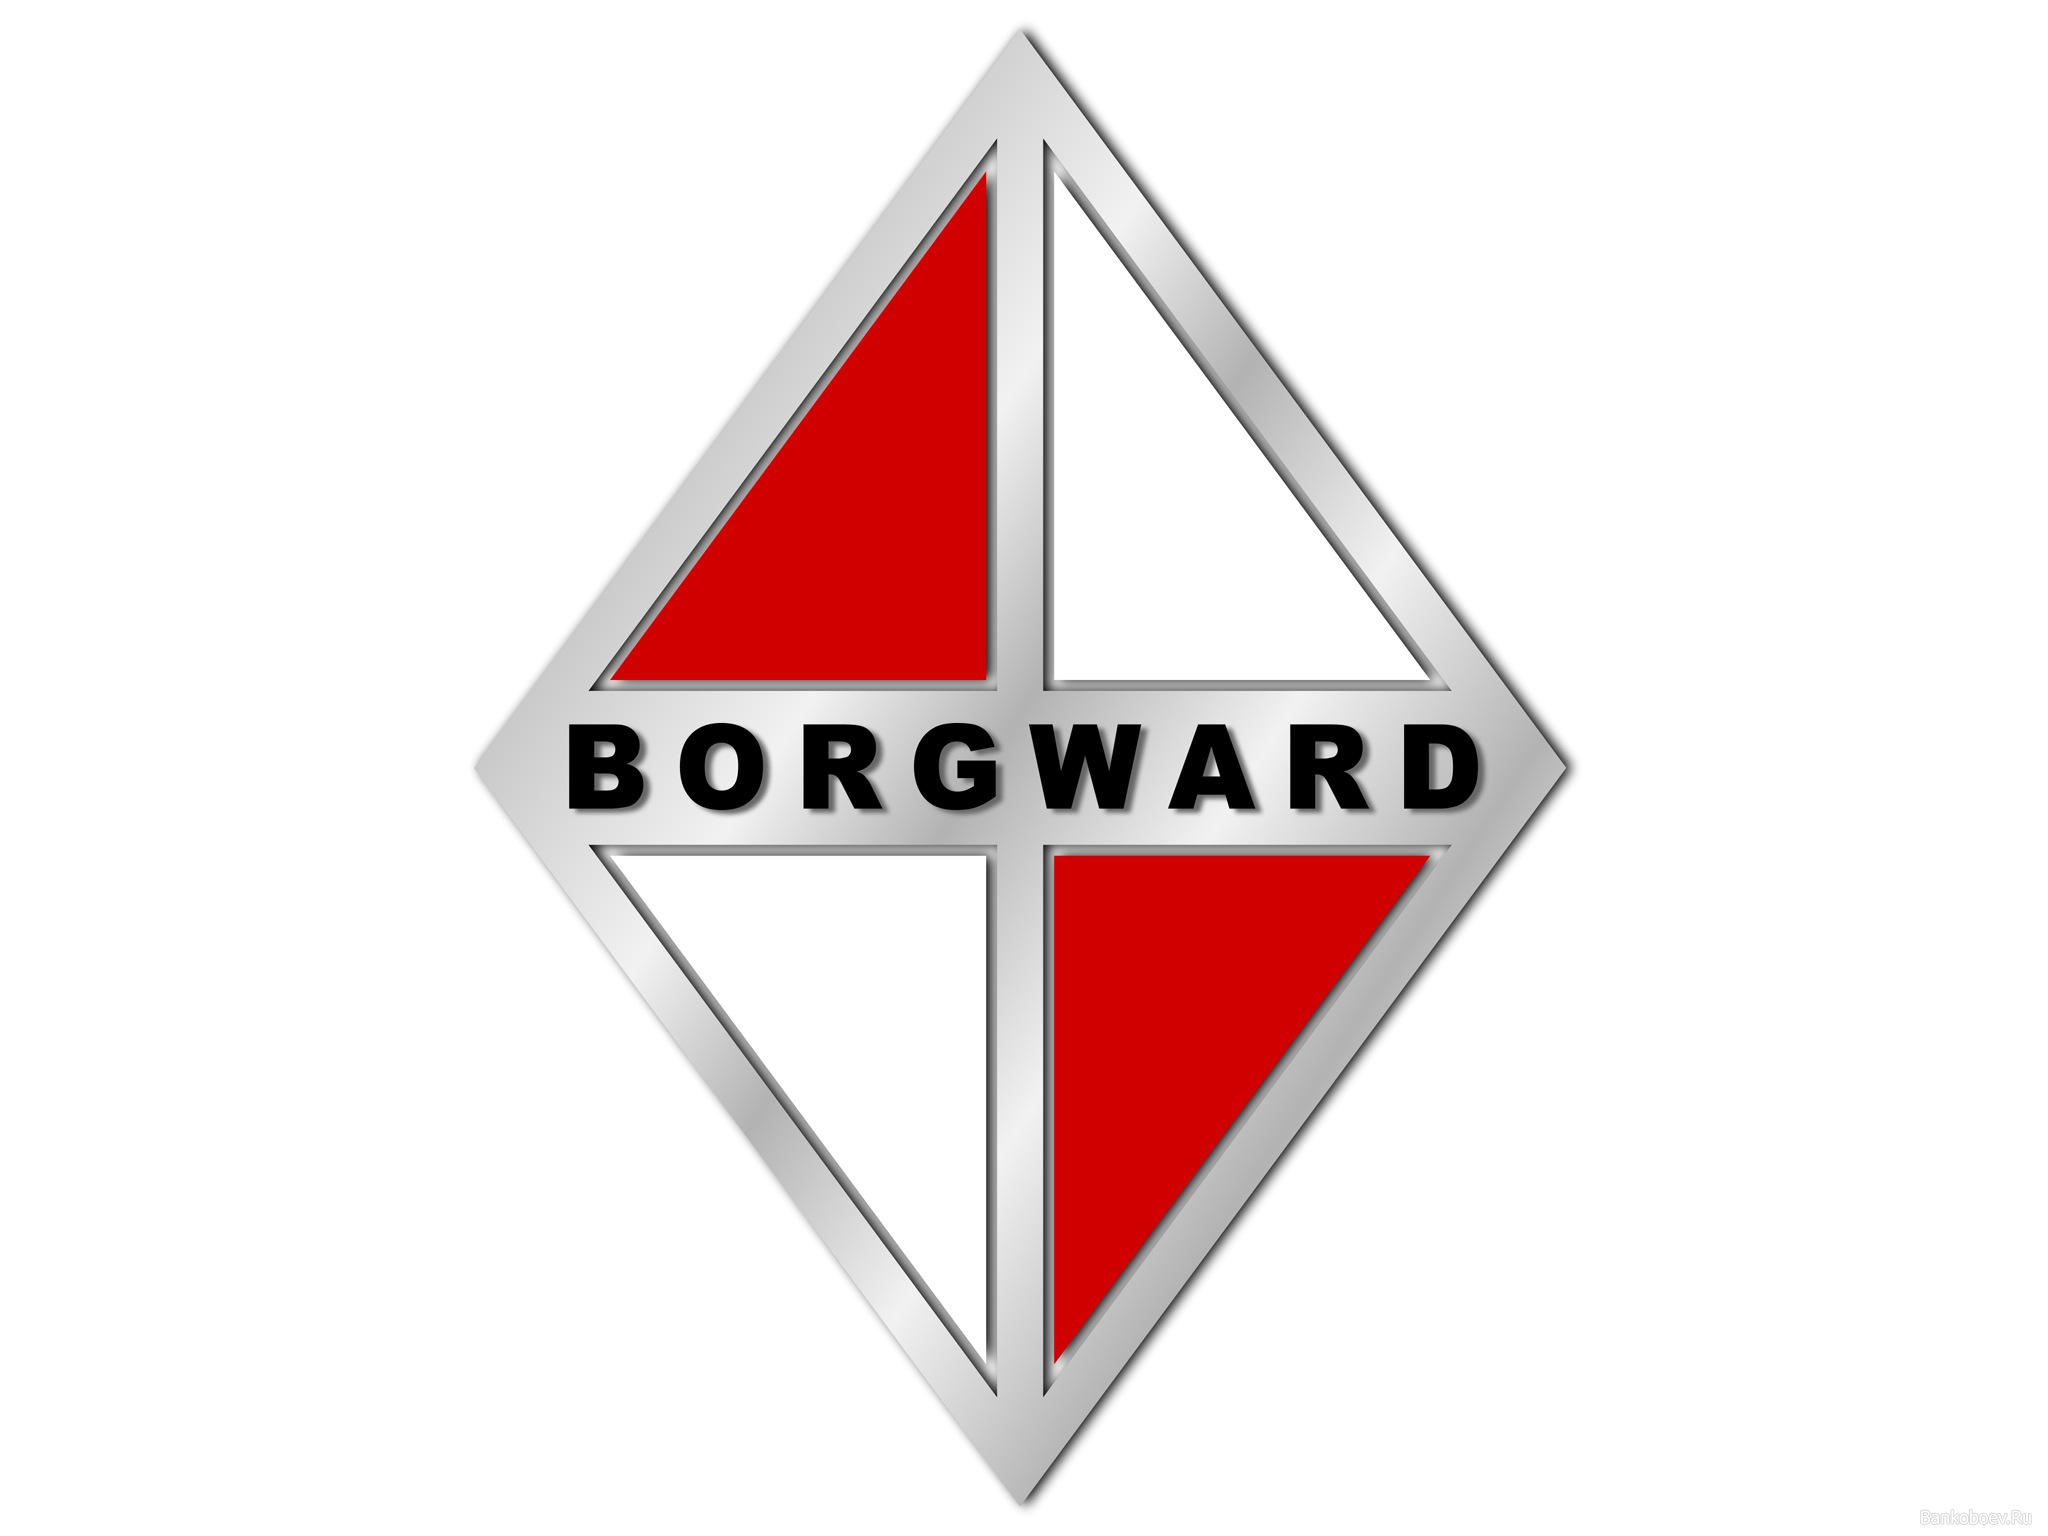   Borgward   